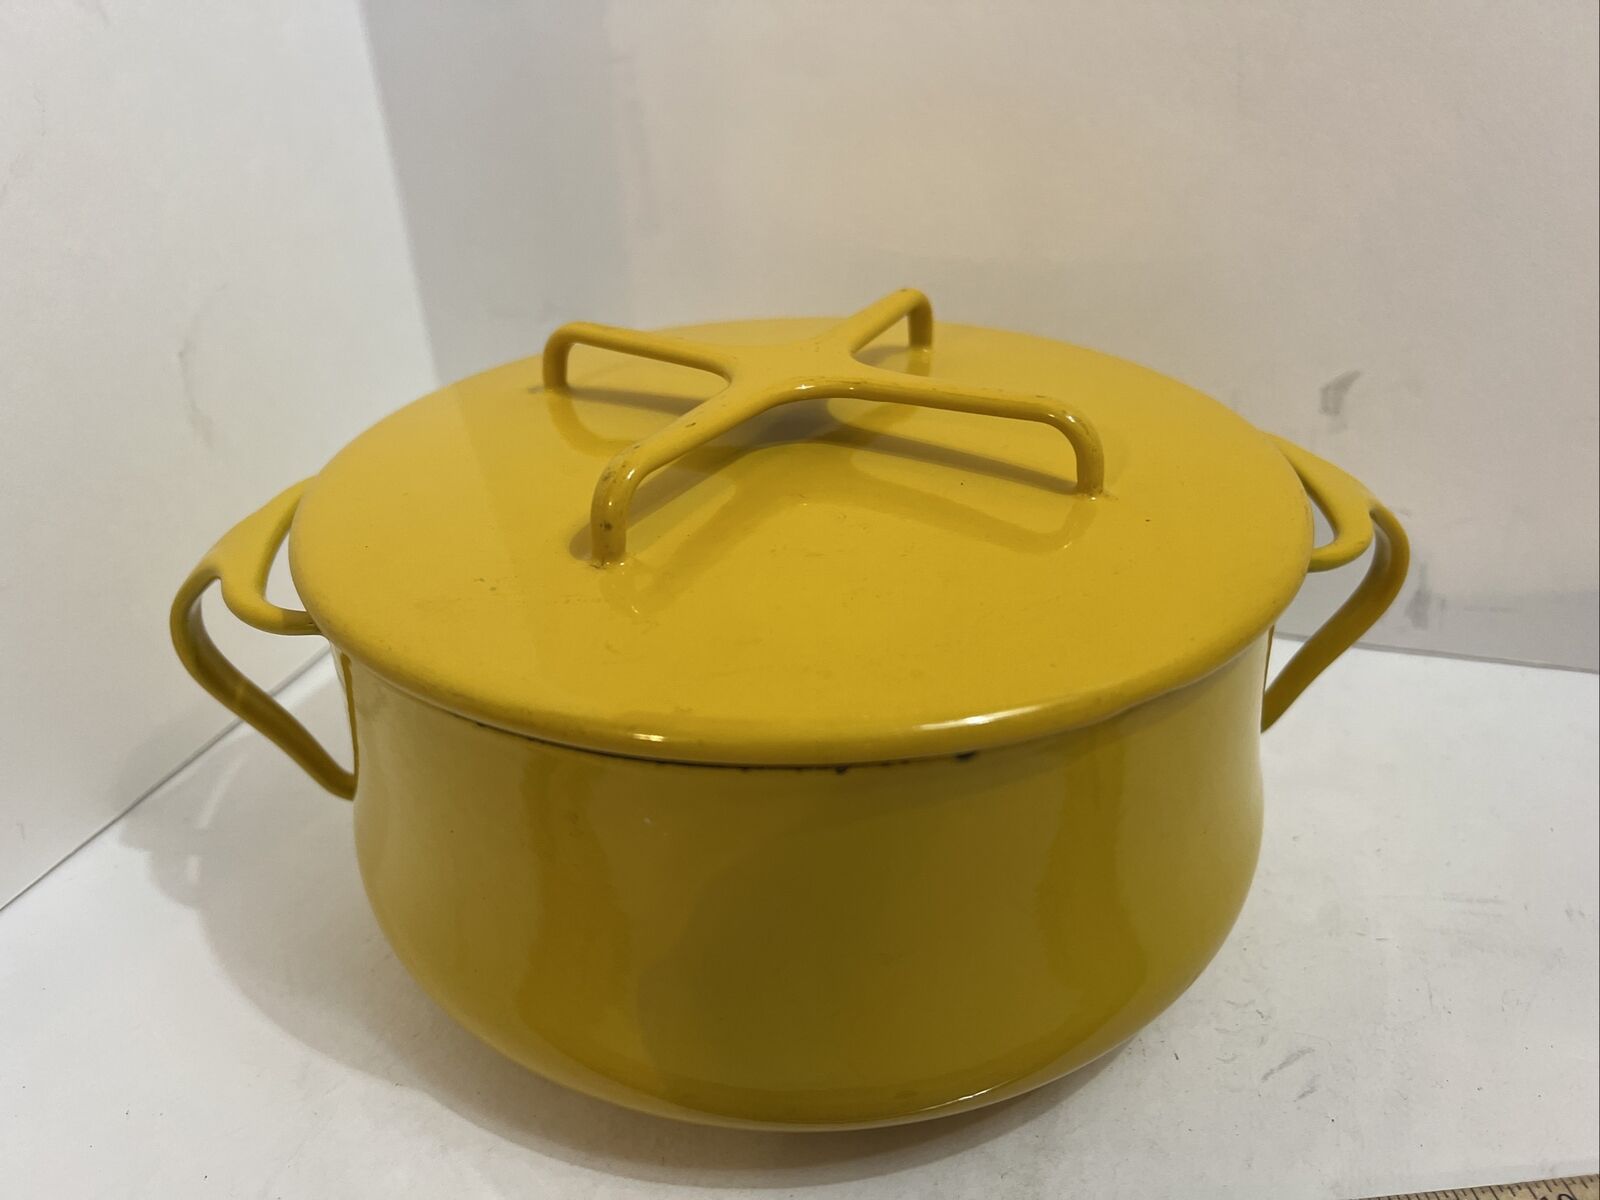 Vintage Dansk Designs France IHQ Kobenstyle Yellow Enamel Pot Dutch Oven 2 Qt